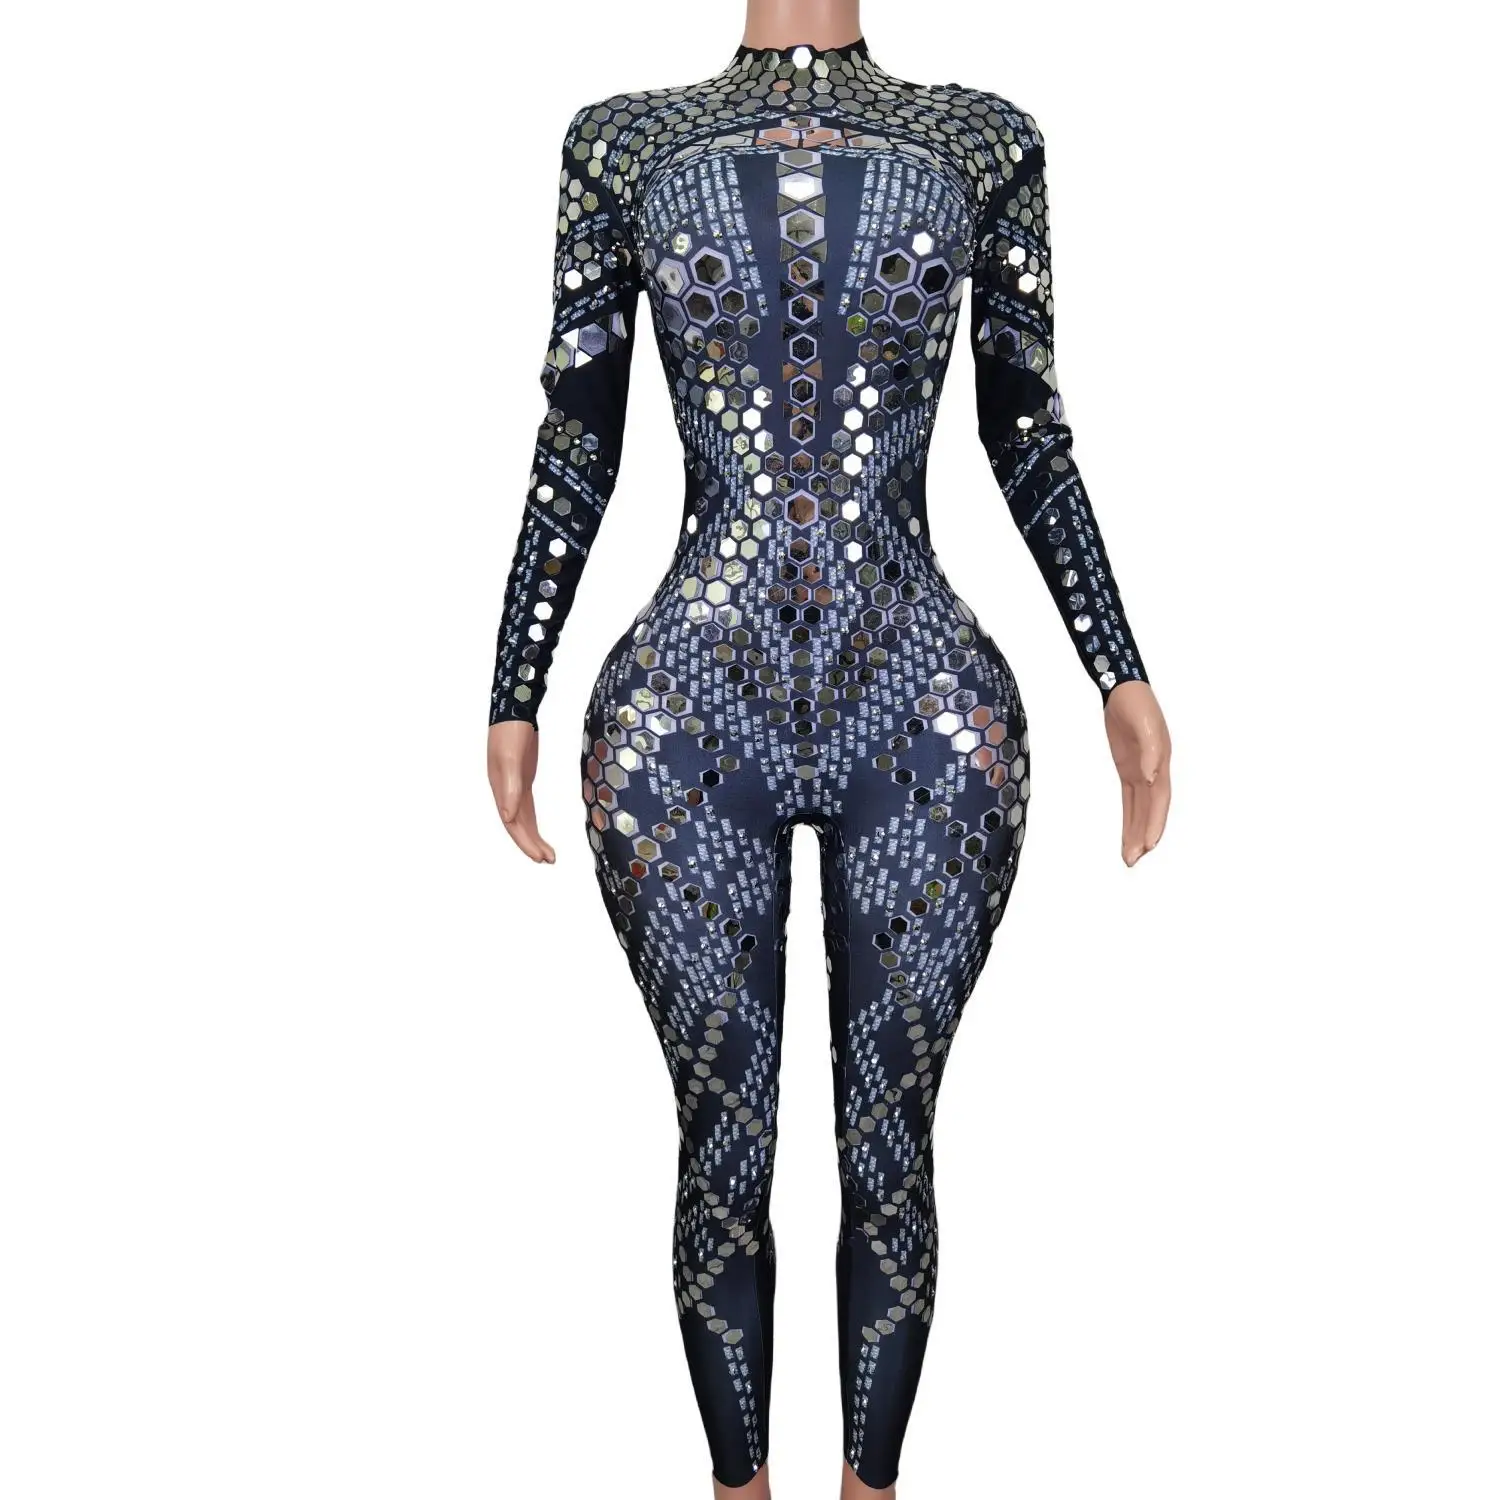 

Latest Sparkle Diamond Jumpsuit for Ladies Sexy Spandex Dance Performance Costumes Women One Piece Rhinestone Jumpsuit Liubianku